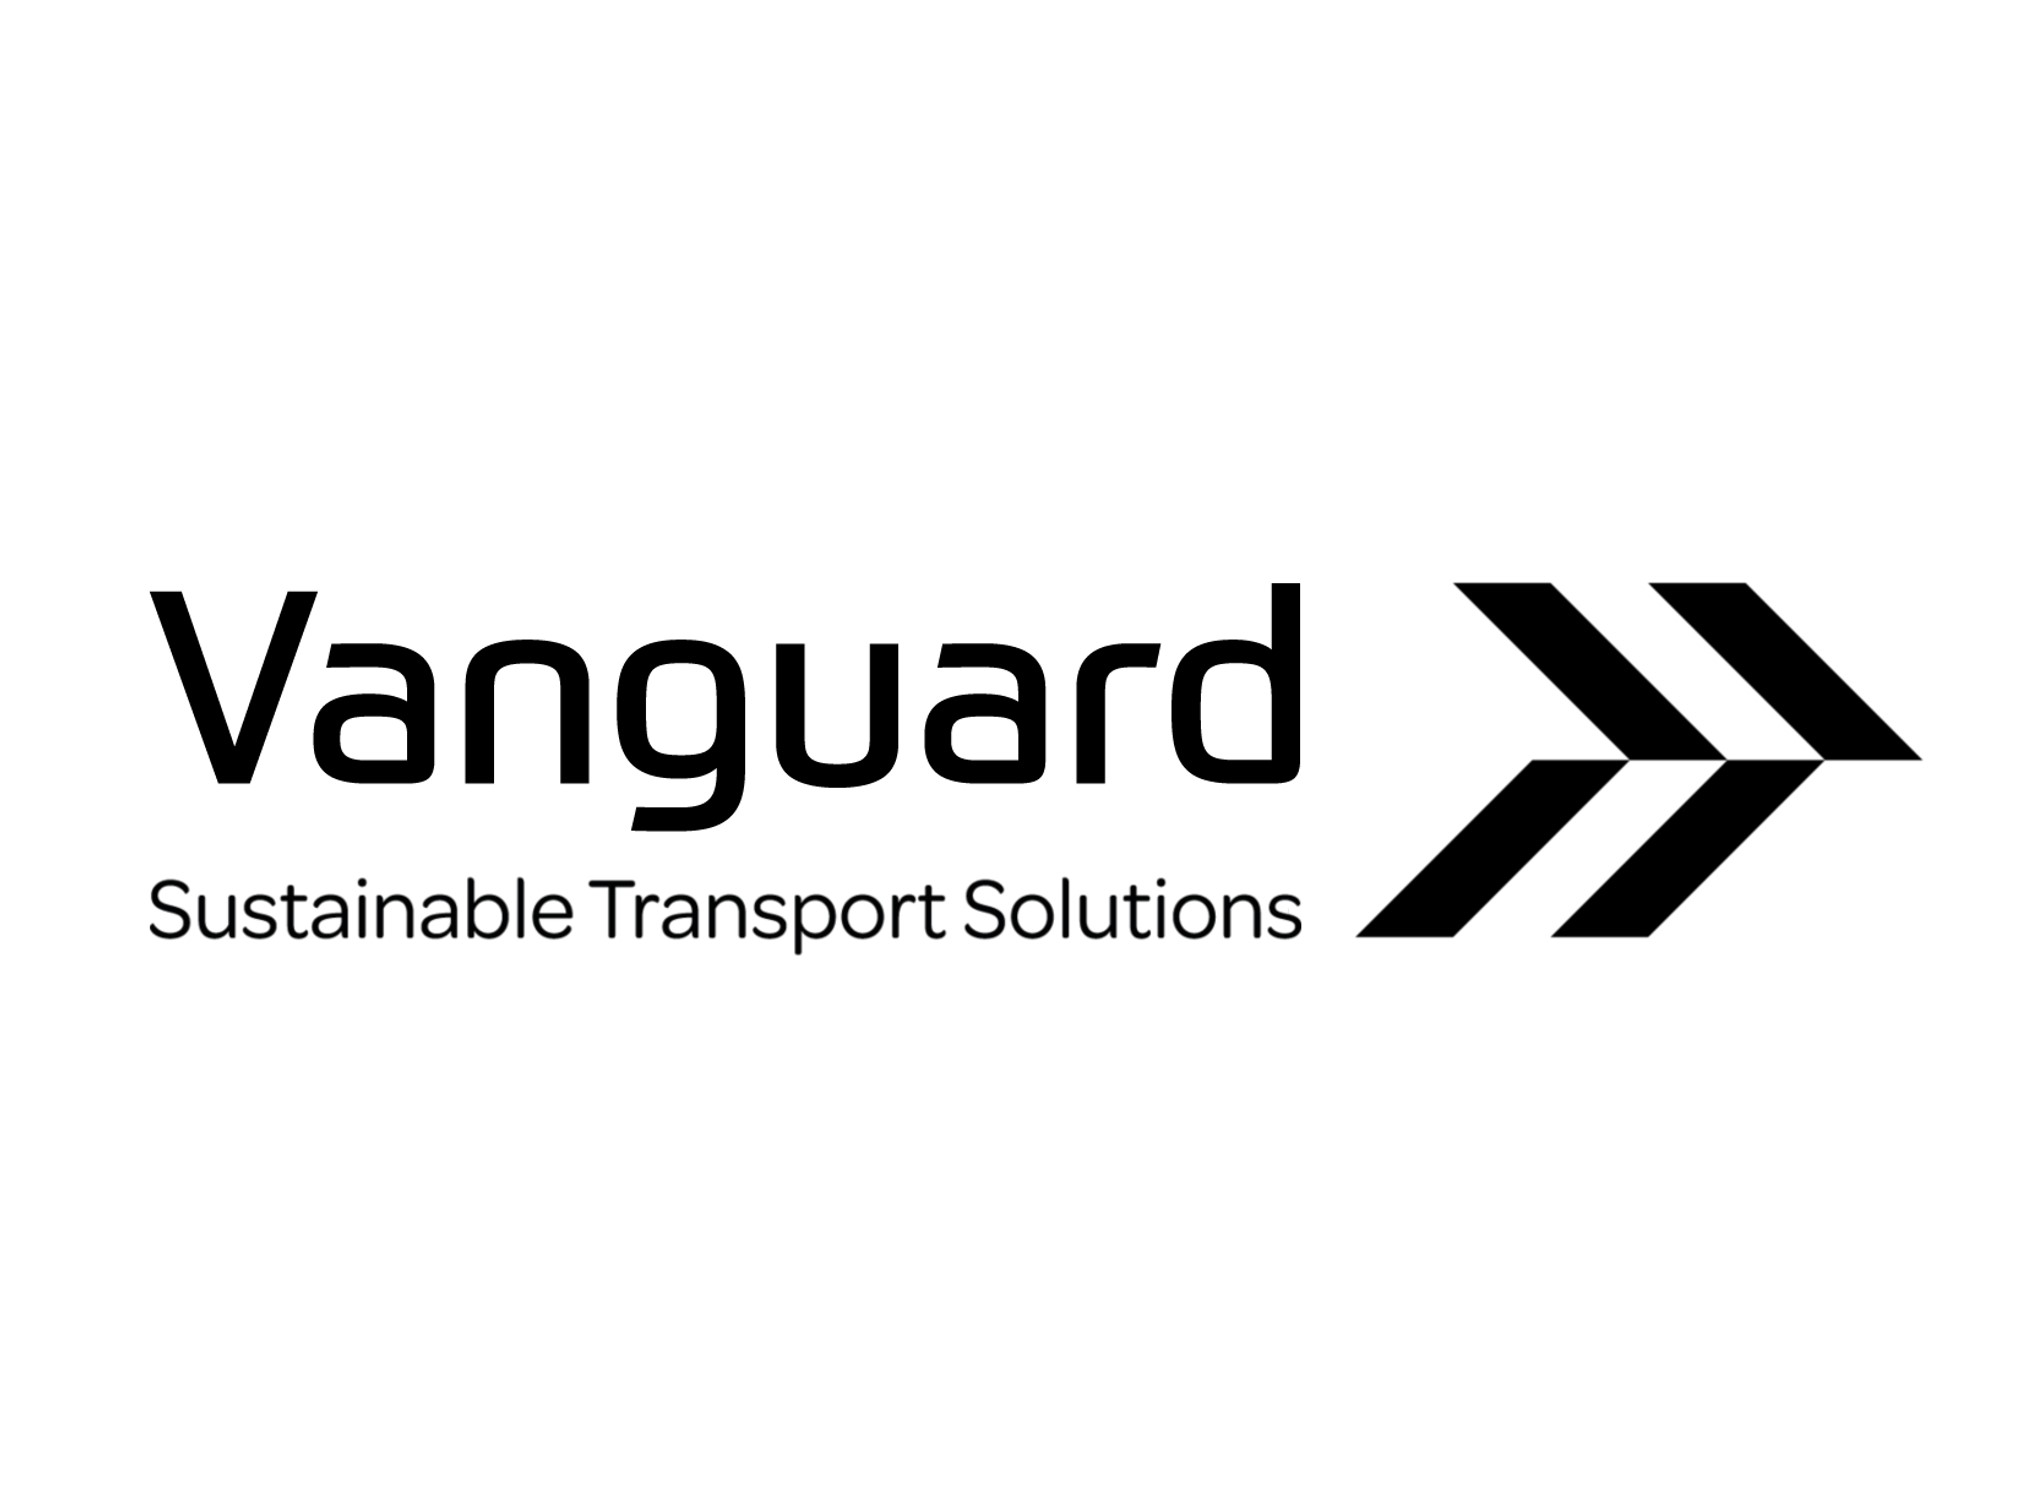 Vanguard STS